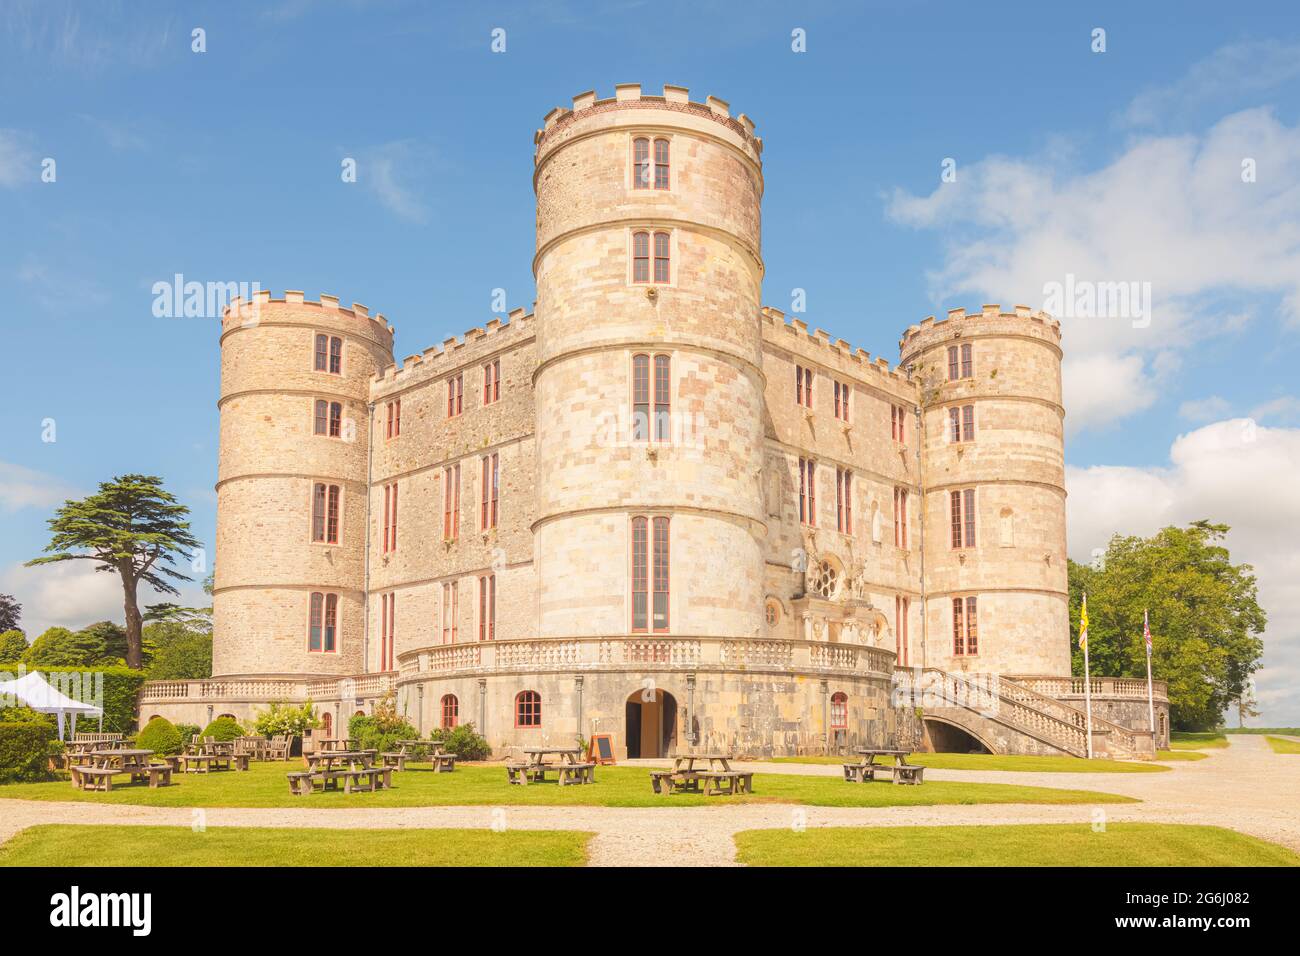 East Lulworth, UK - June 25 2021: The historic, medieval Lulworth Castle, Dorset, UK on a sunny summer day. Stock Photo